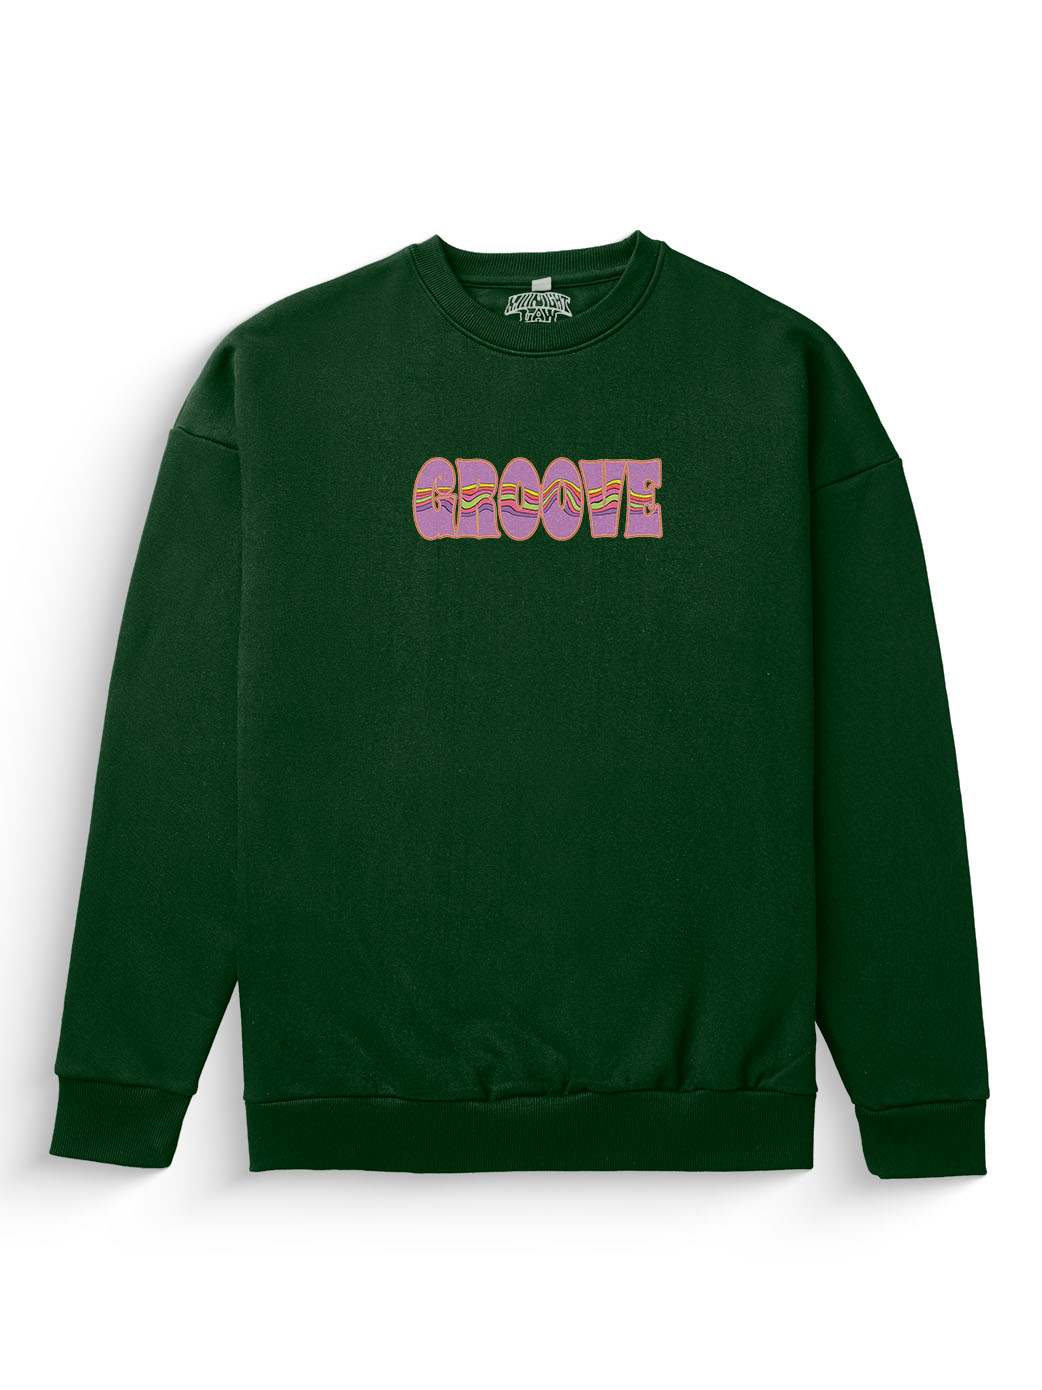 Groove Sweatshirt - SALE